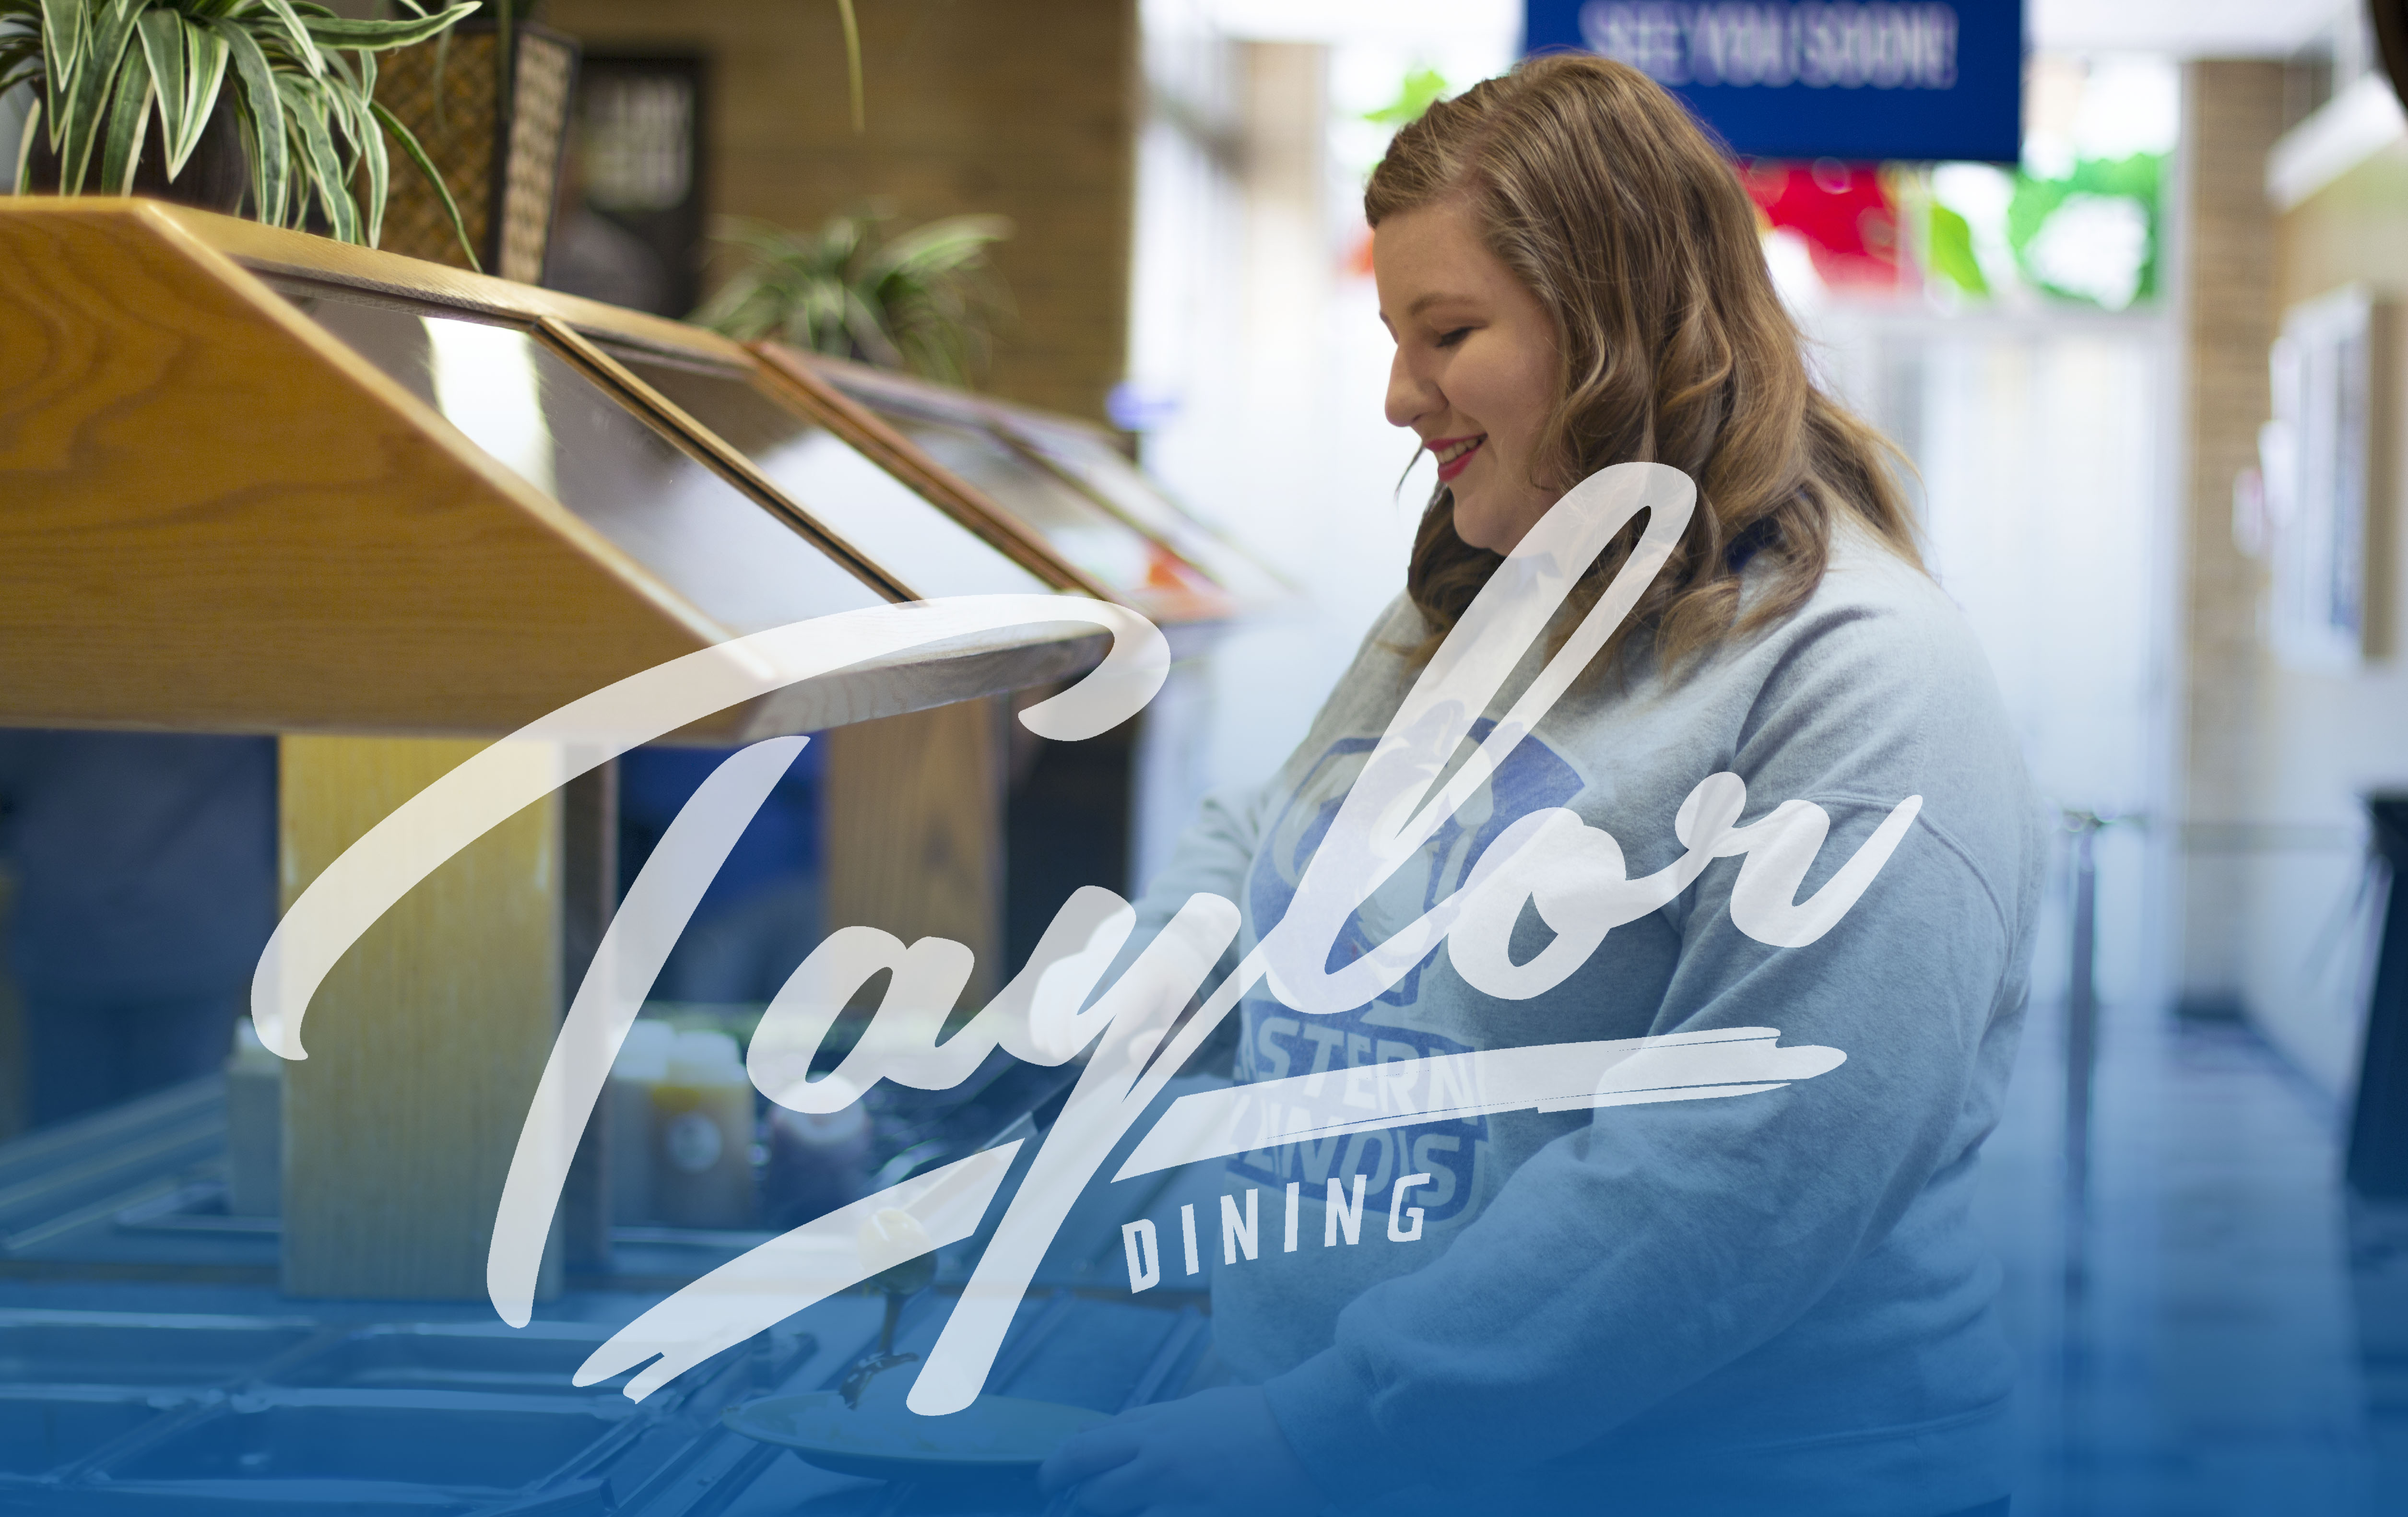 Taylor Dining Center